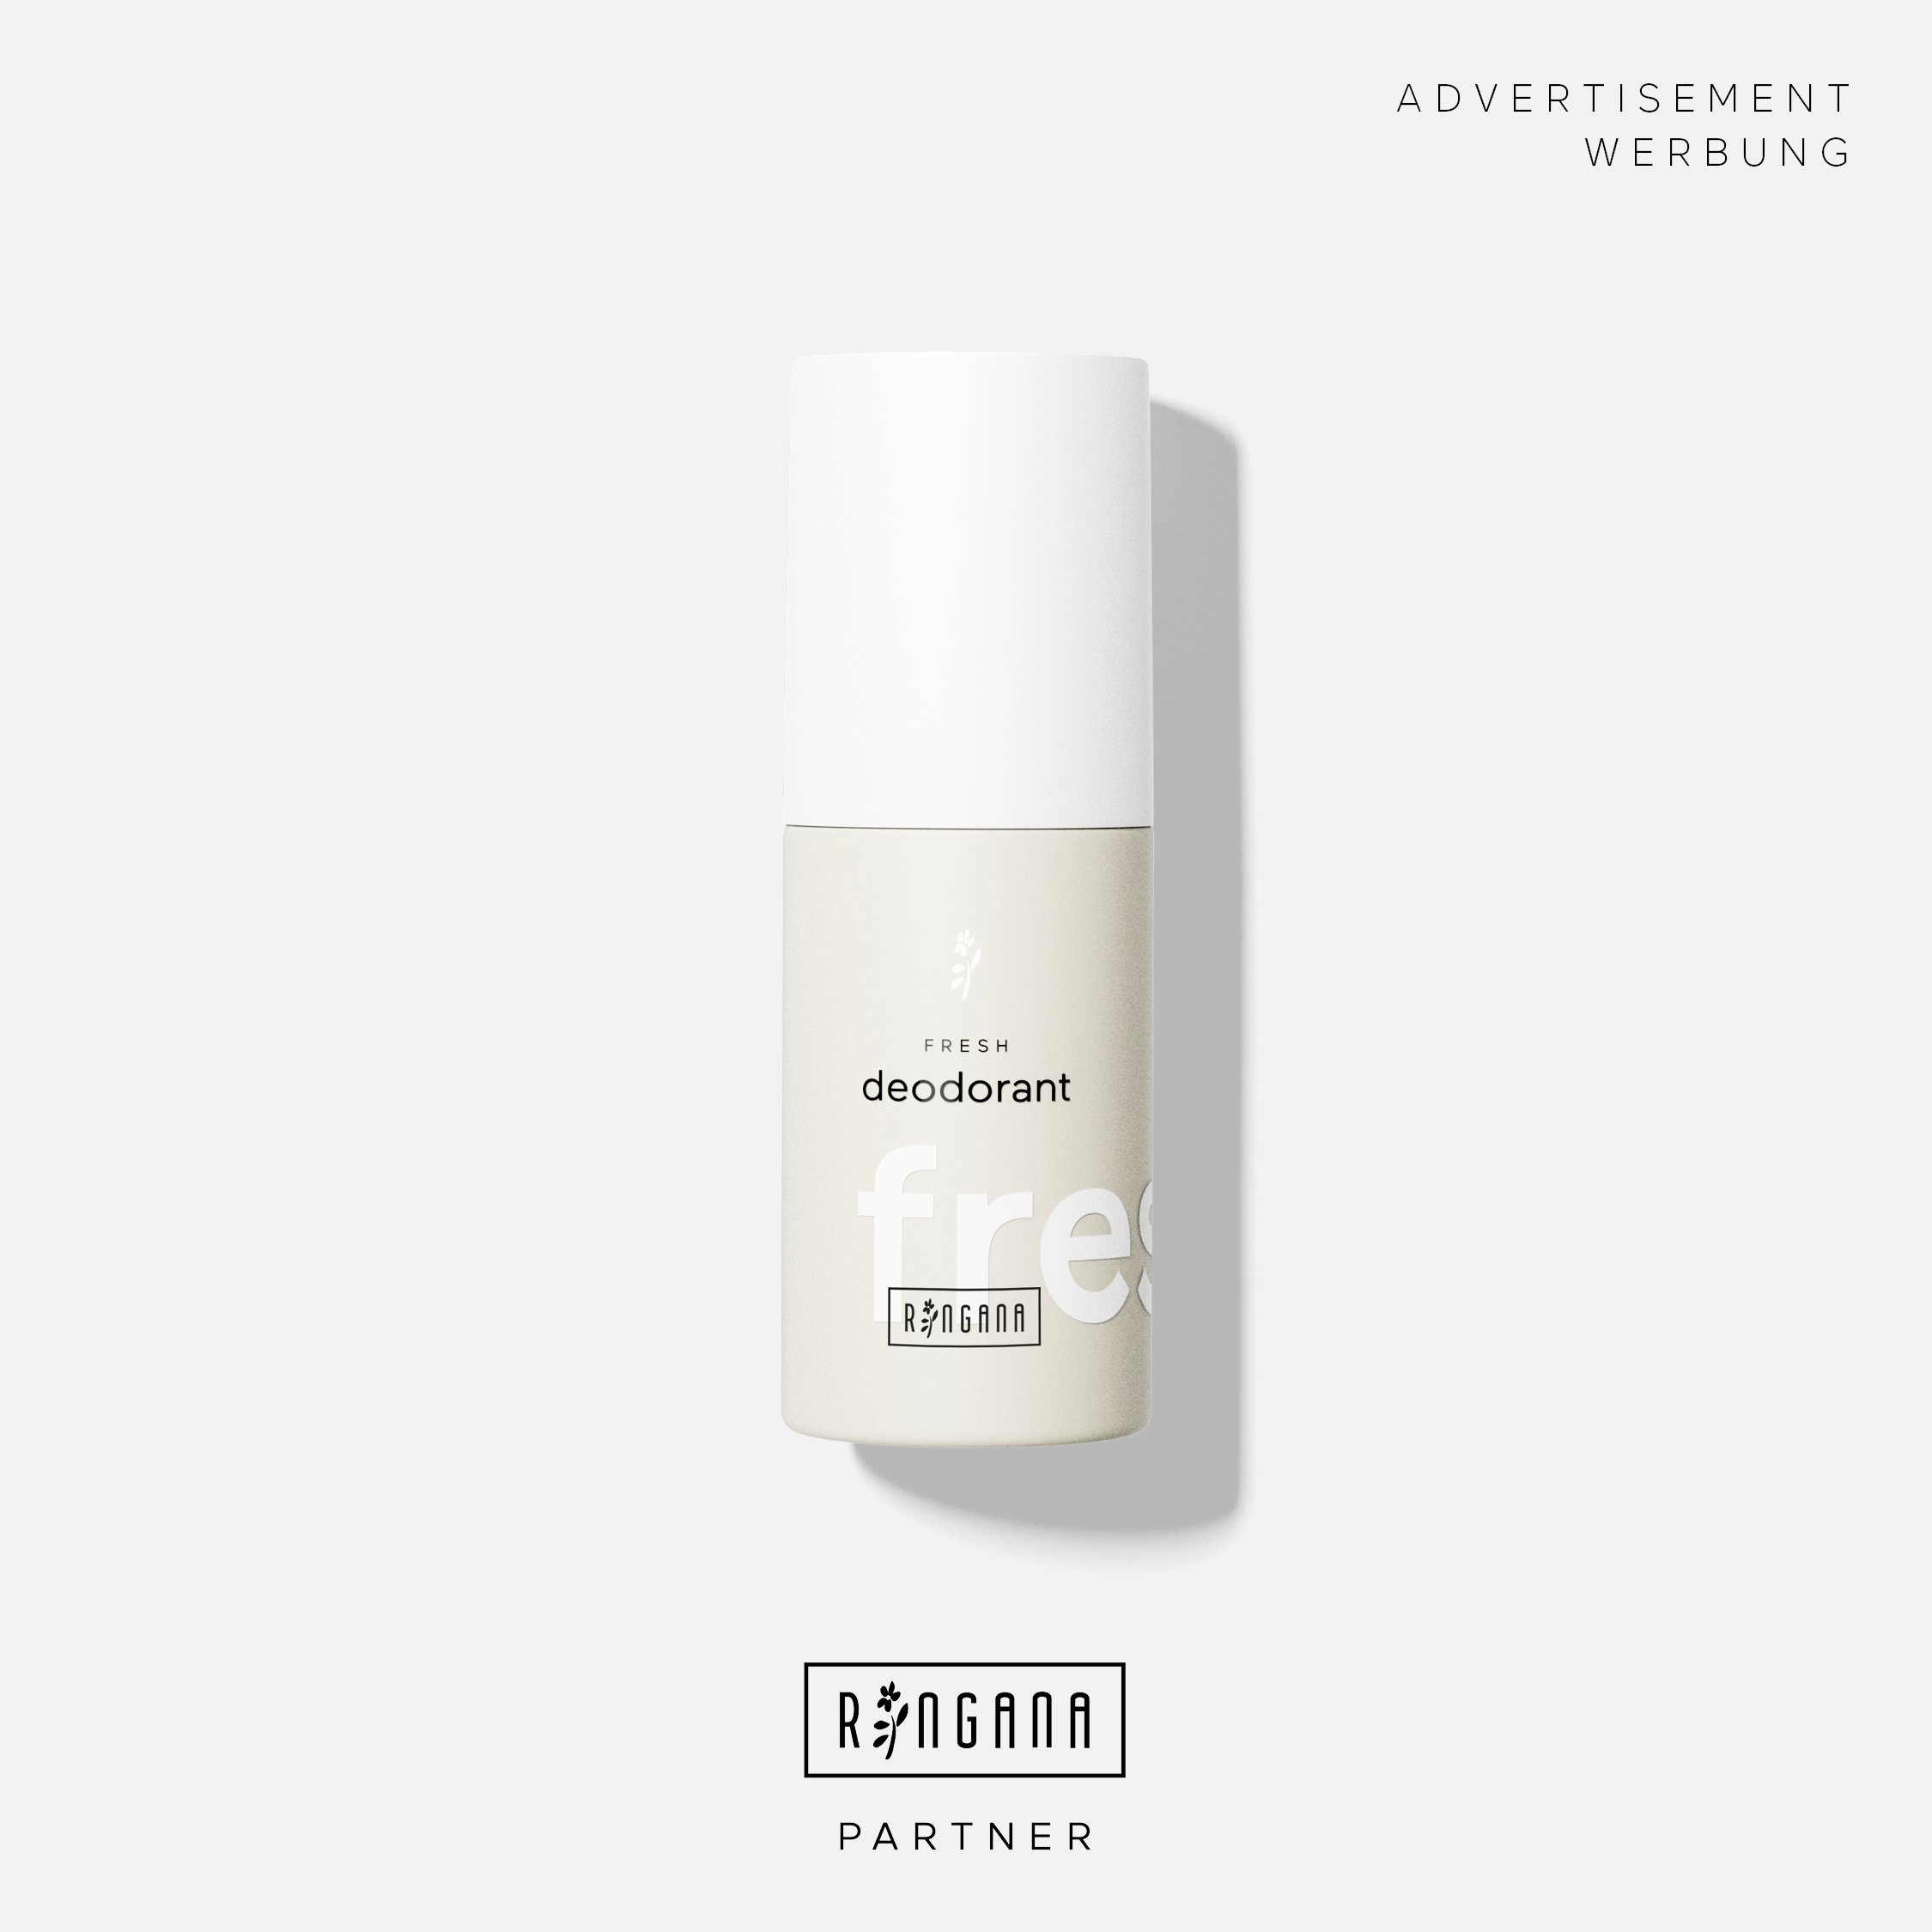 FRESH deodorant pocket DEOCREME IM POCKET-FORMAT  € 11,90